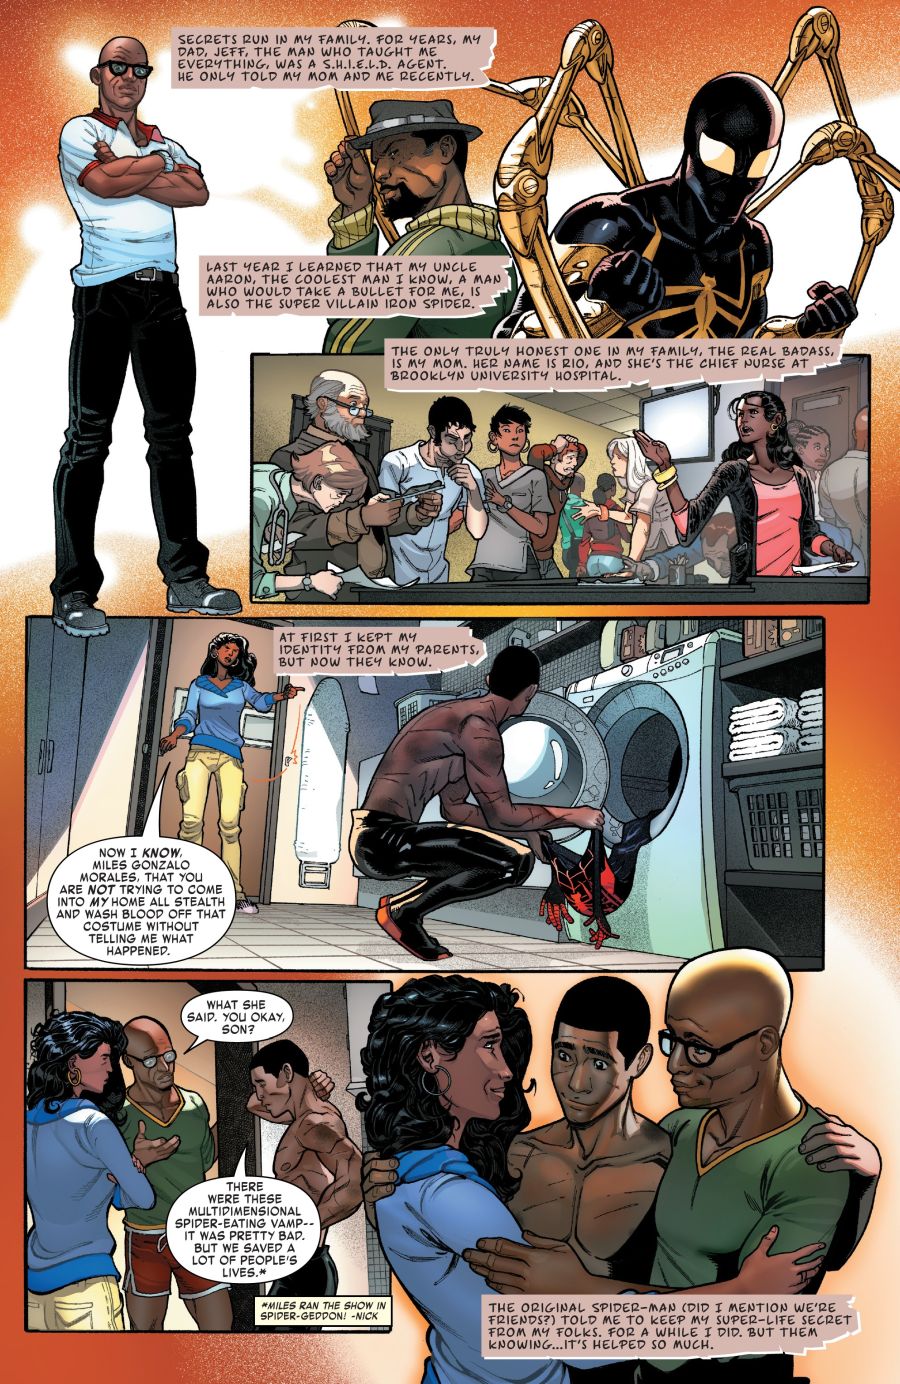 Miles Morales: Spider-Man #1